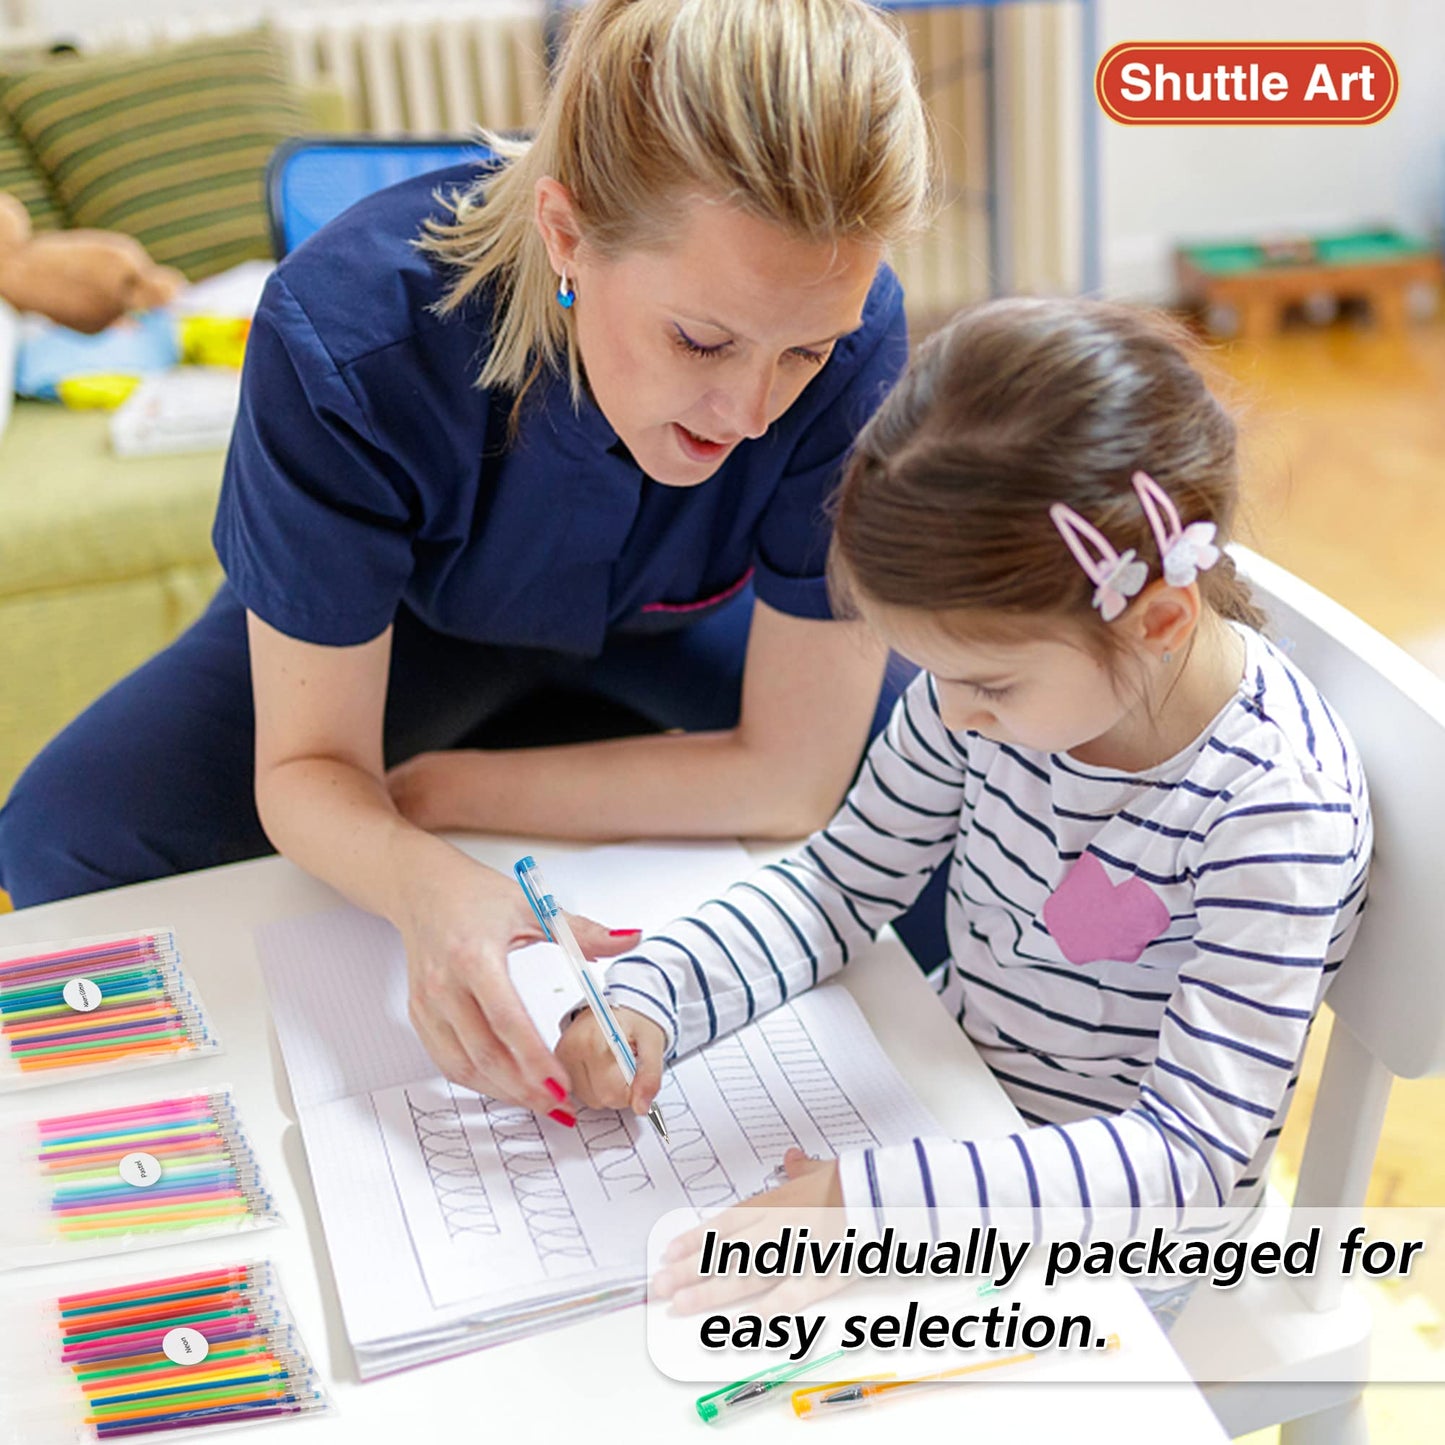 Gel Pen Refills, Shuttle Art 180 Colors (No Duplicates) Gel Pen Refills, 7 Color Types for Kids Adults Coloring Books Drawing Doodling Crafts